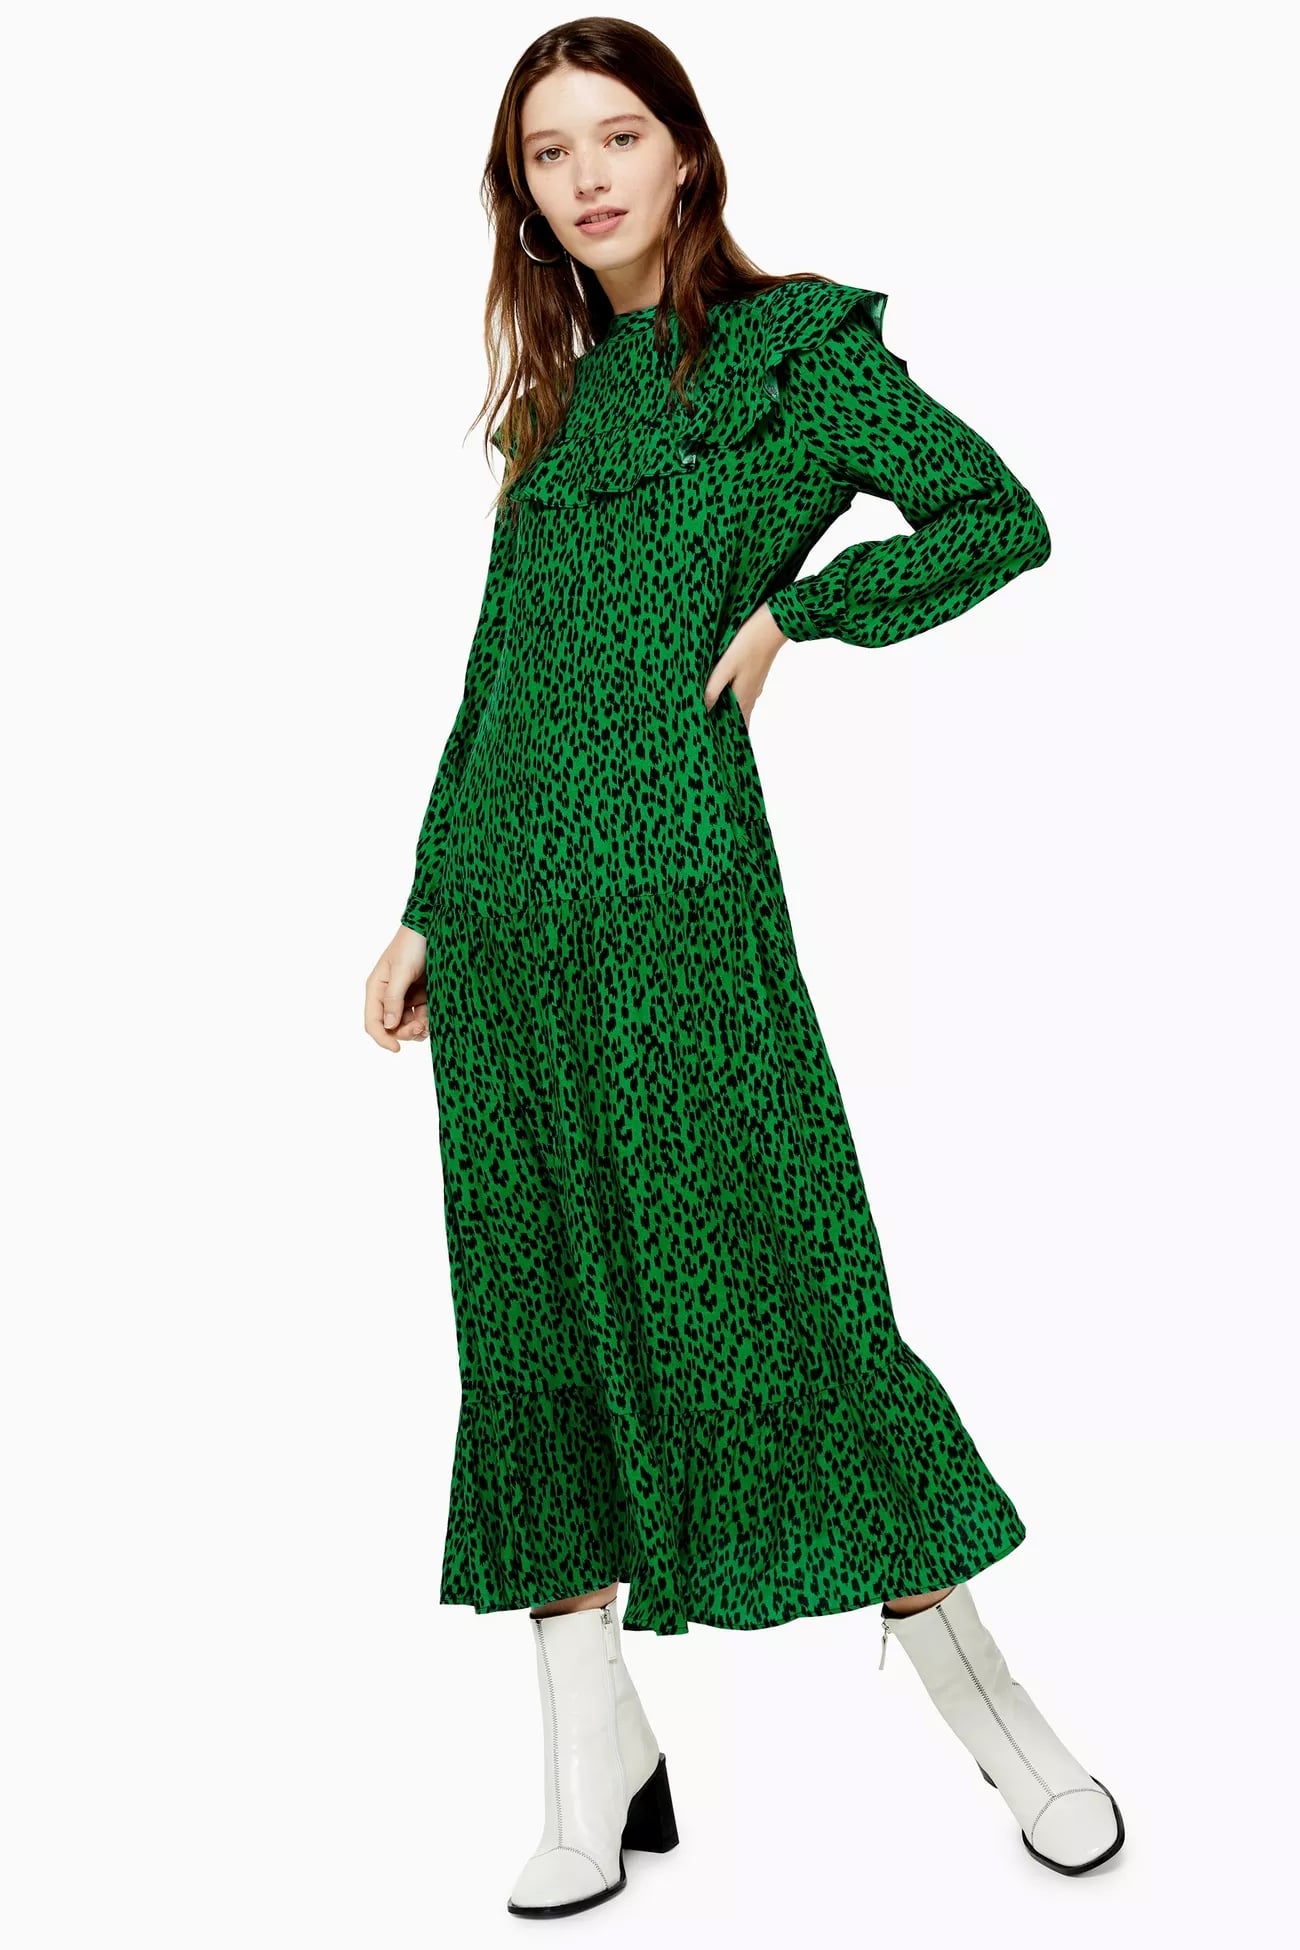 topshop green animal print dress